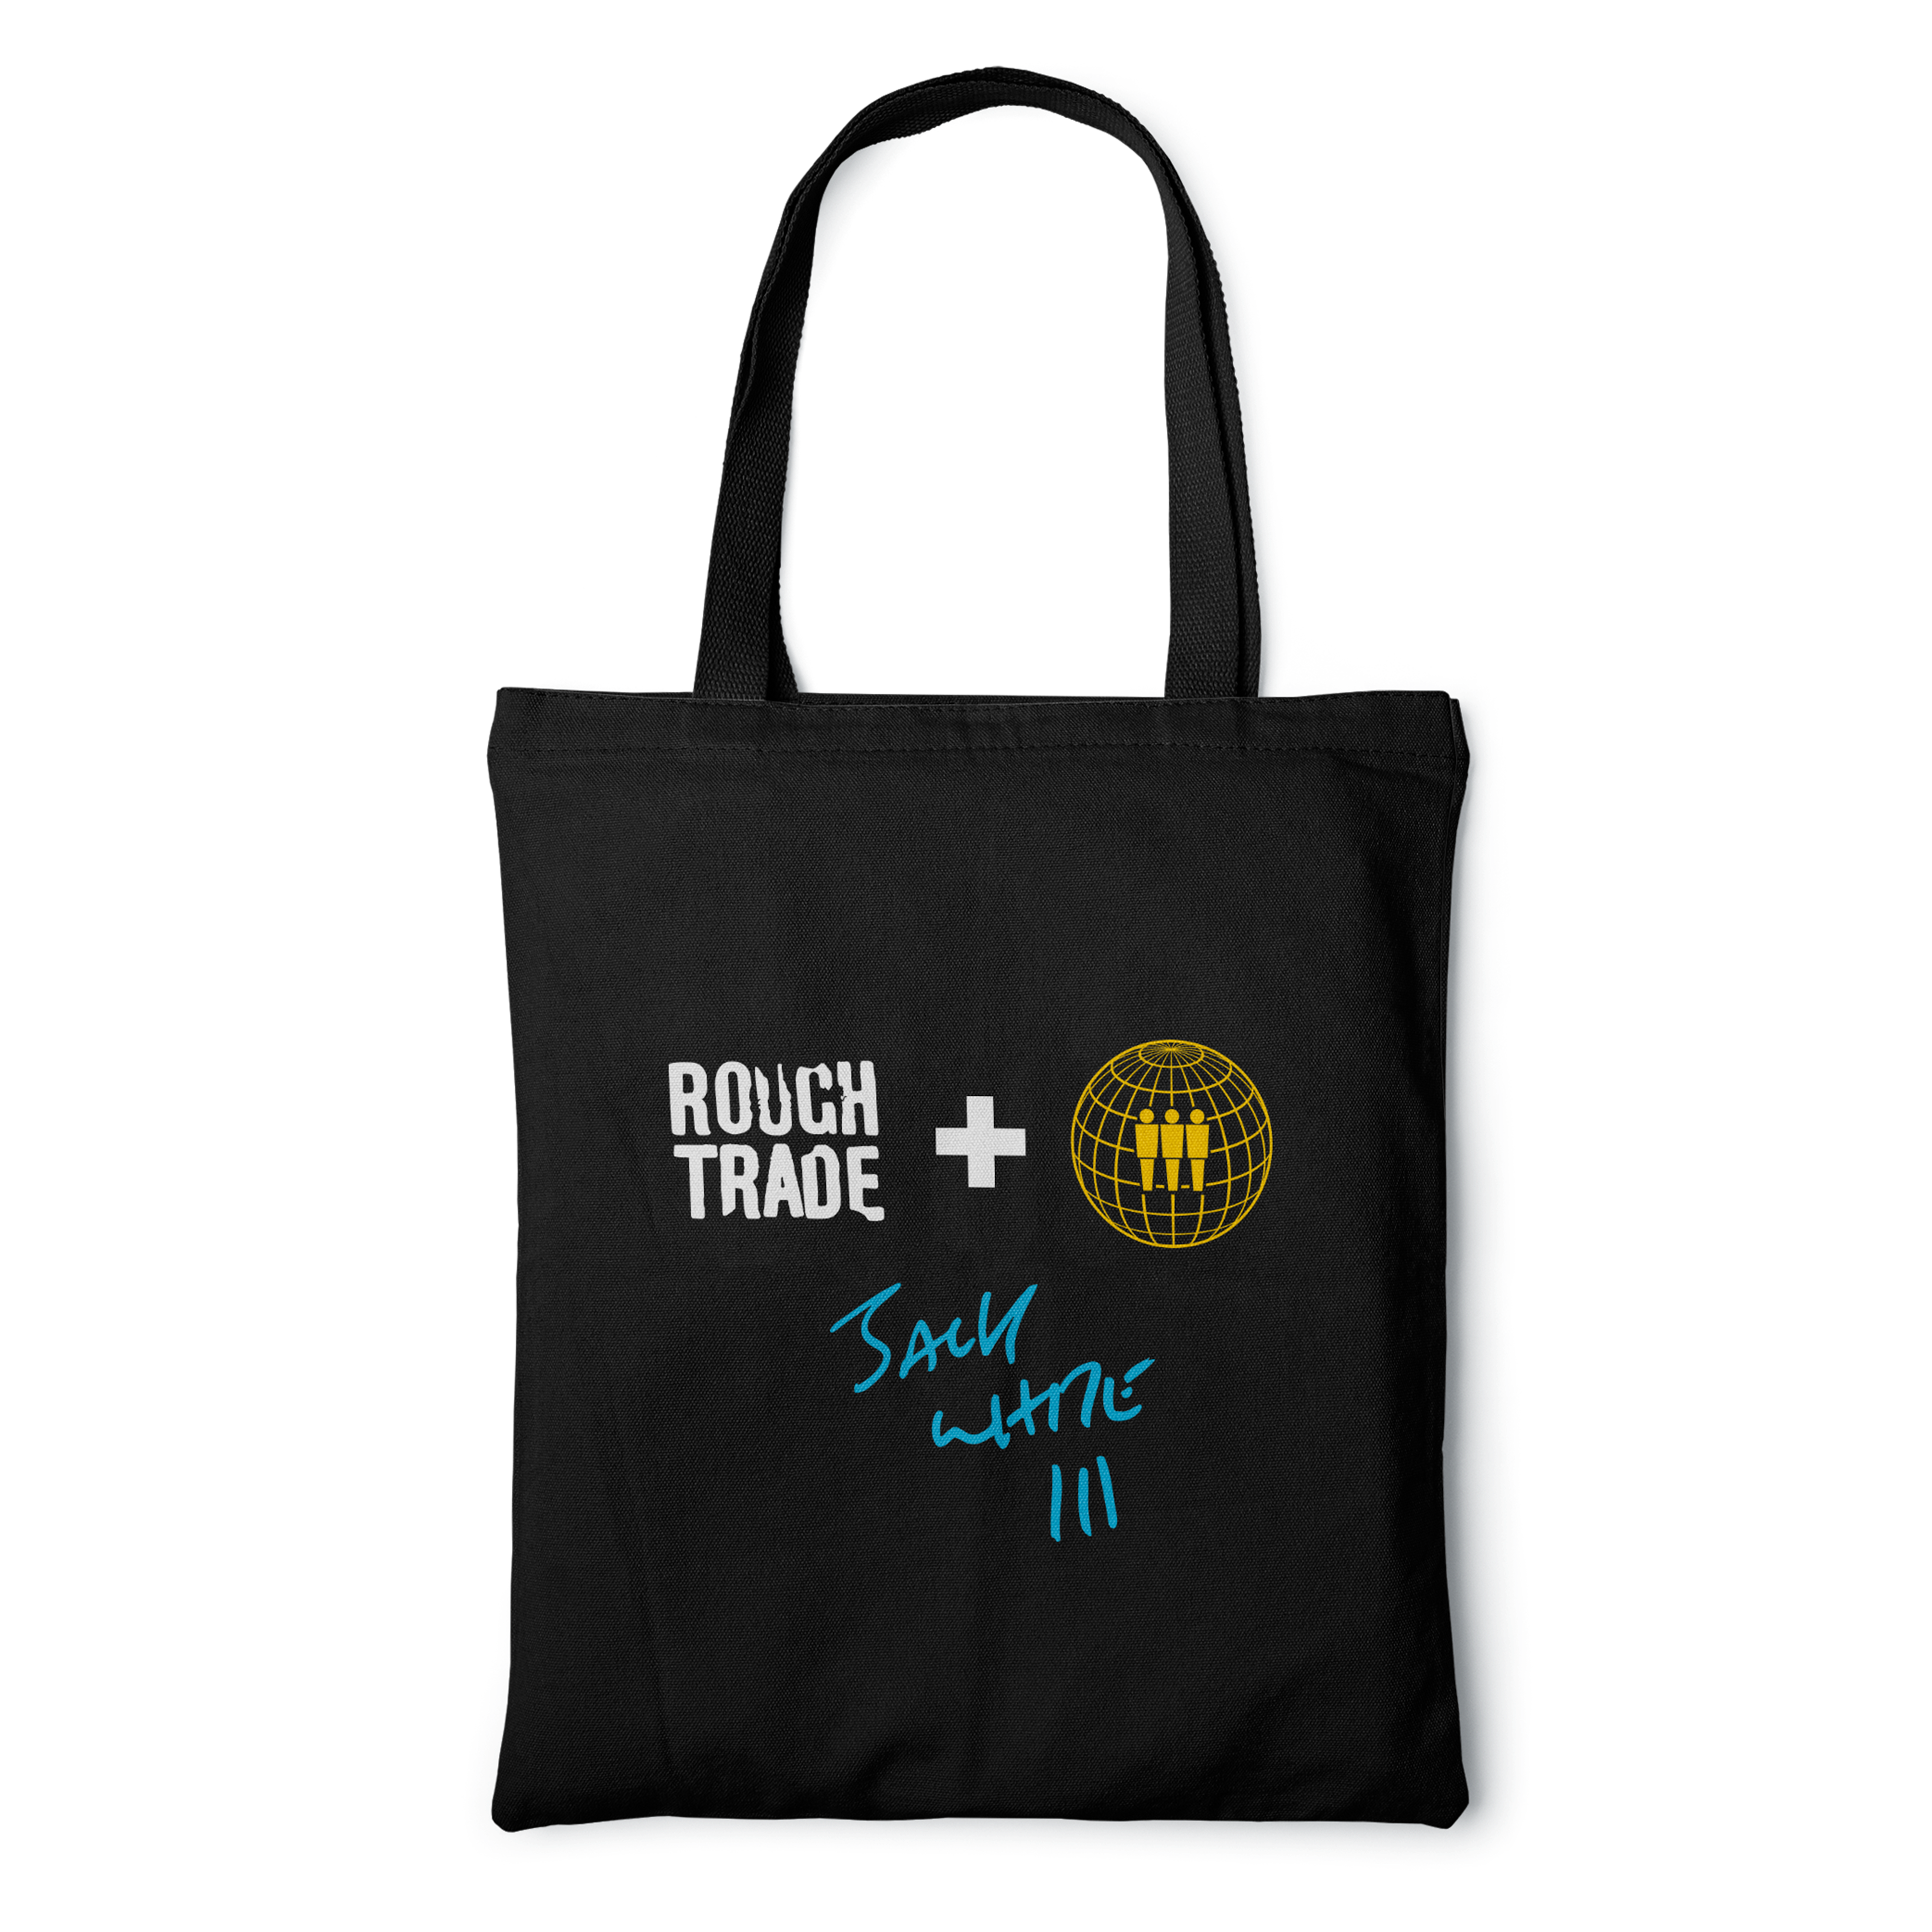 Album artwork for Rough Trade x Third Man x Jack White LTD Tote Bag by Rough Trade, Jack White, Third Man Records